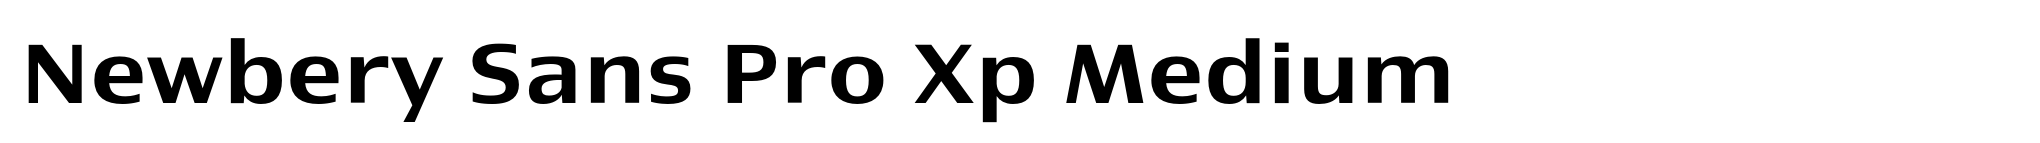 Newbery Sans Pro Xp Medium image